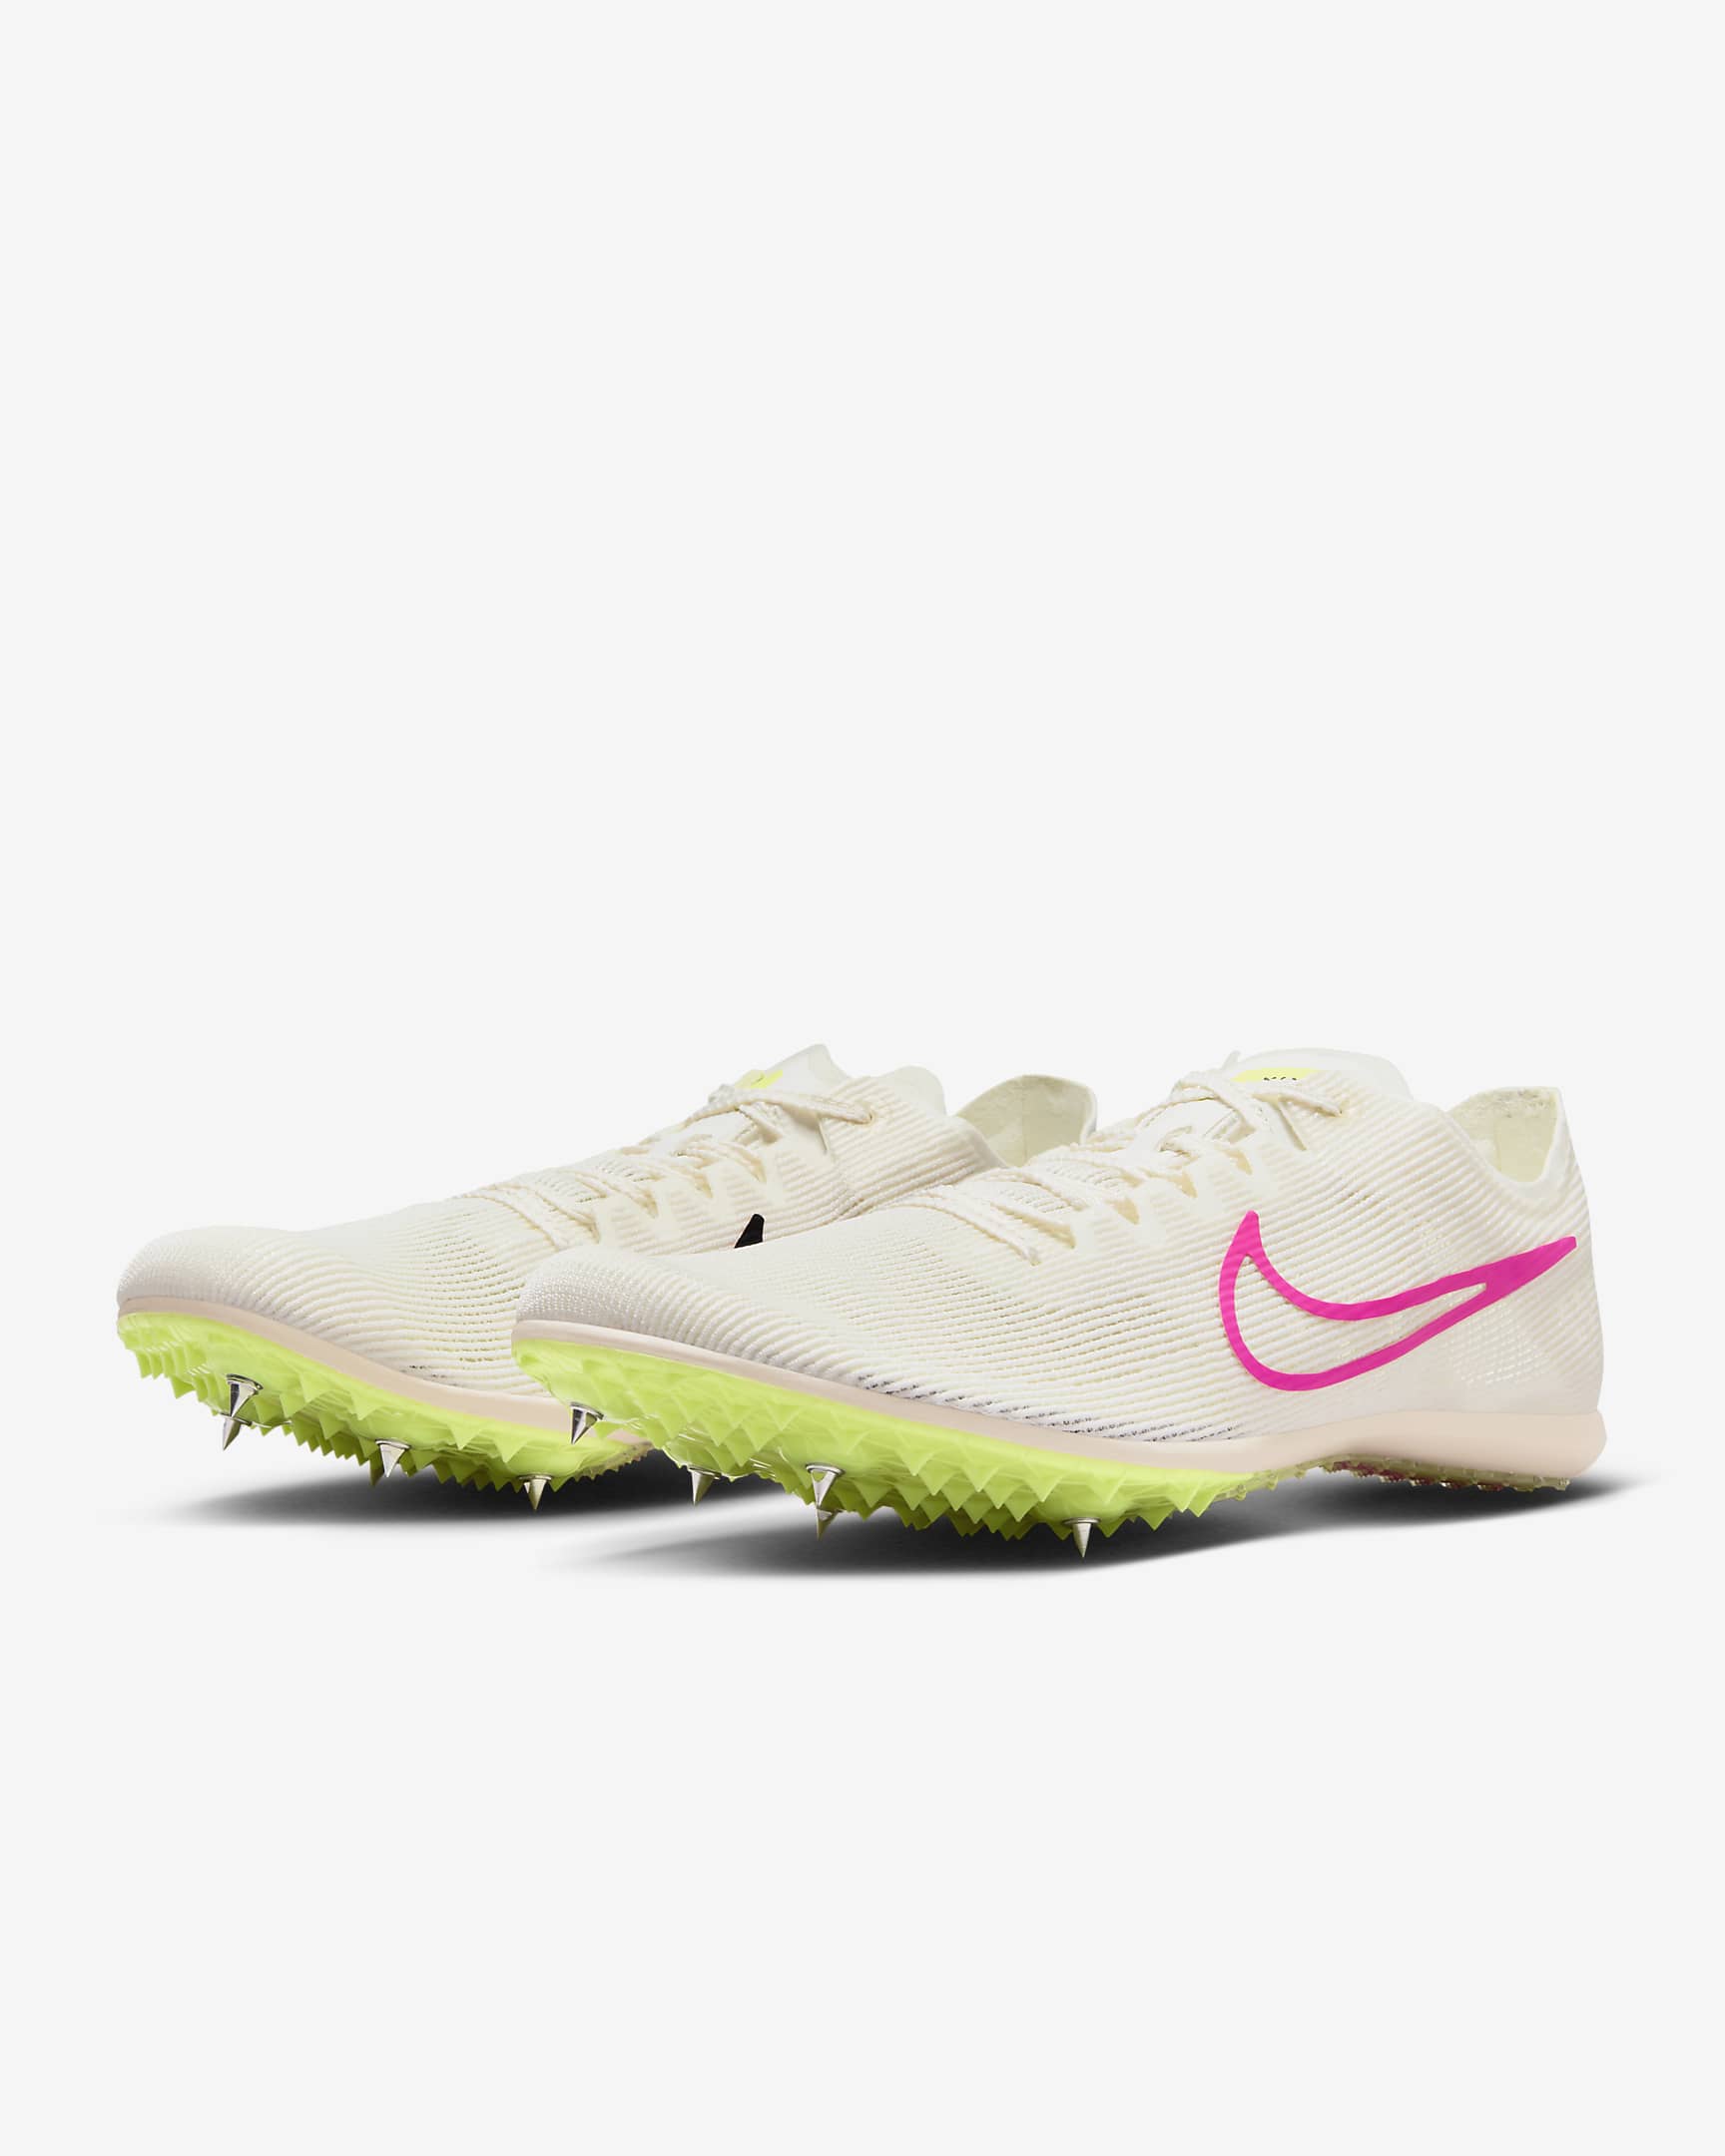 Nike Zoom Mamba 6 Athletics Distance Spikes - Sail/Light Lemon Twist/Guava Ice/Fierce Pink